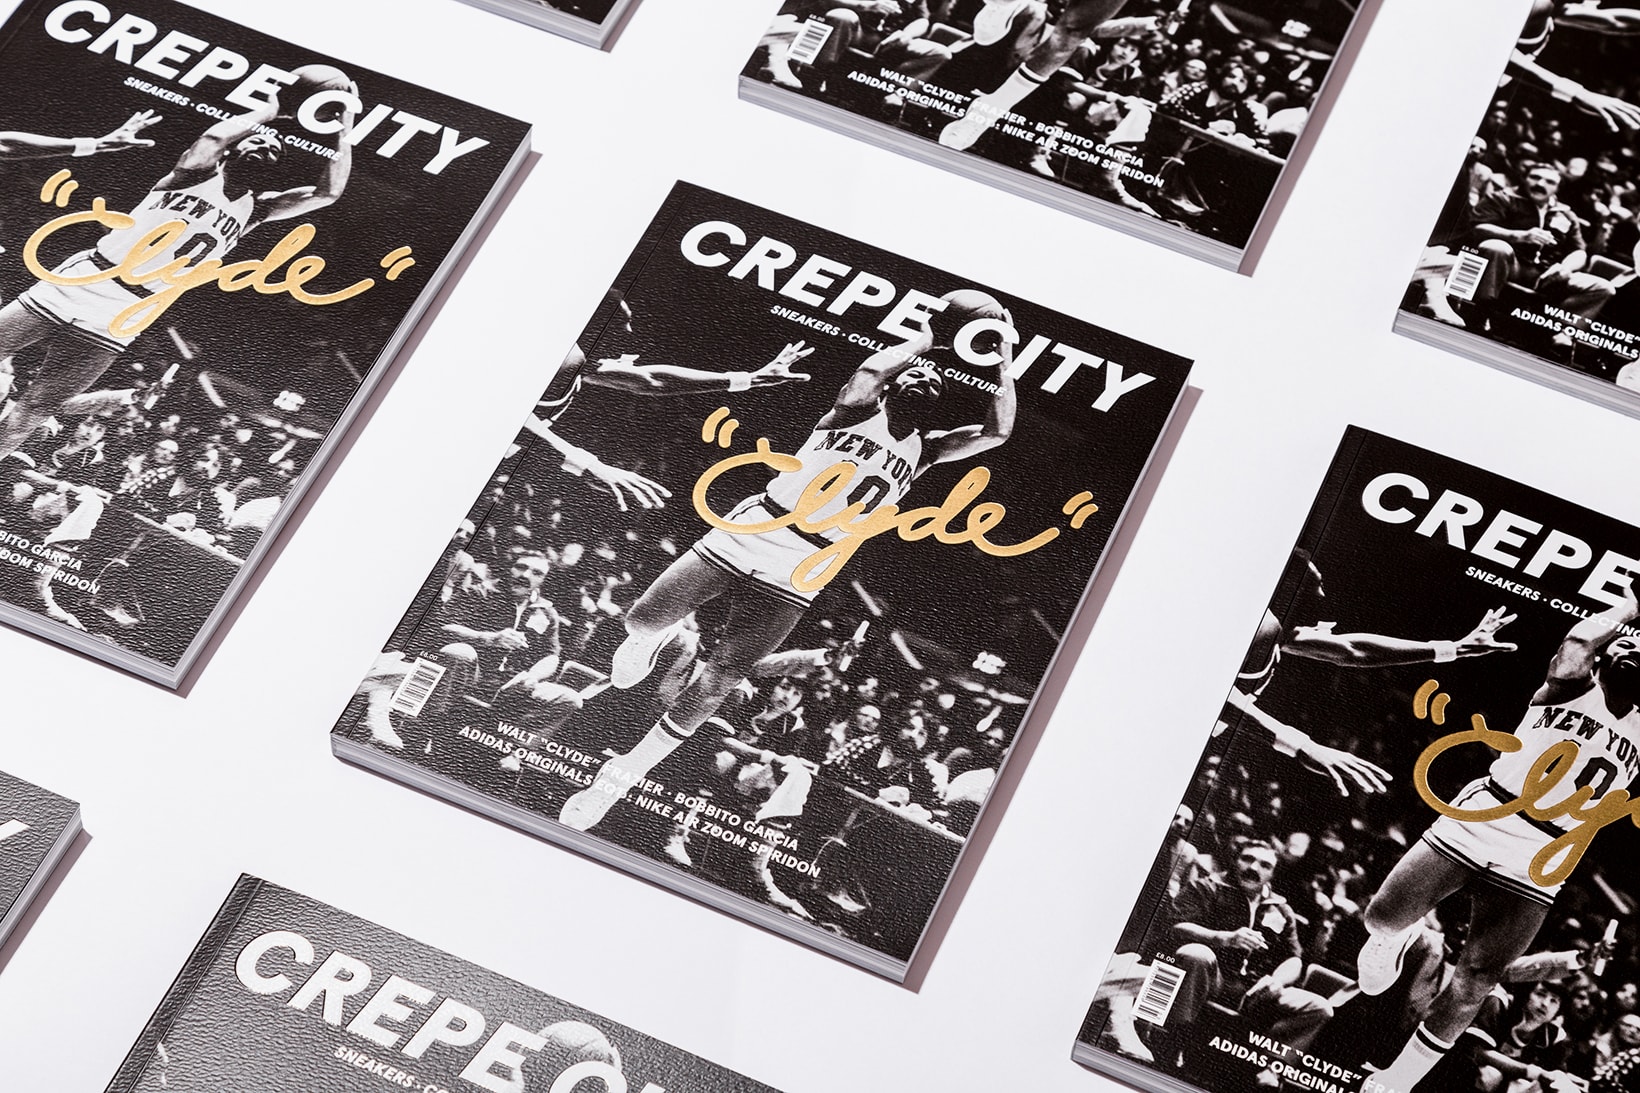 CREPE CITY Magazine Issue 03